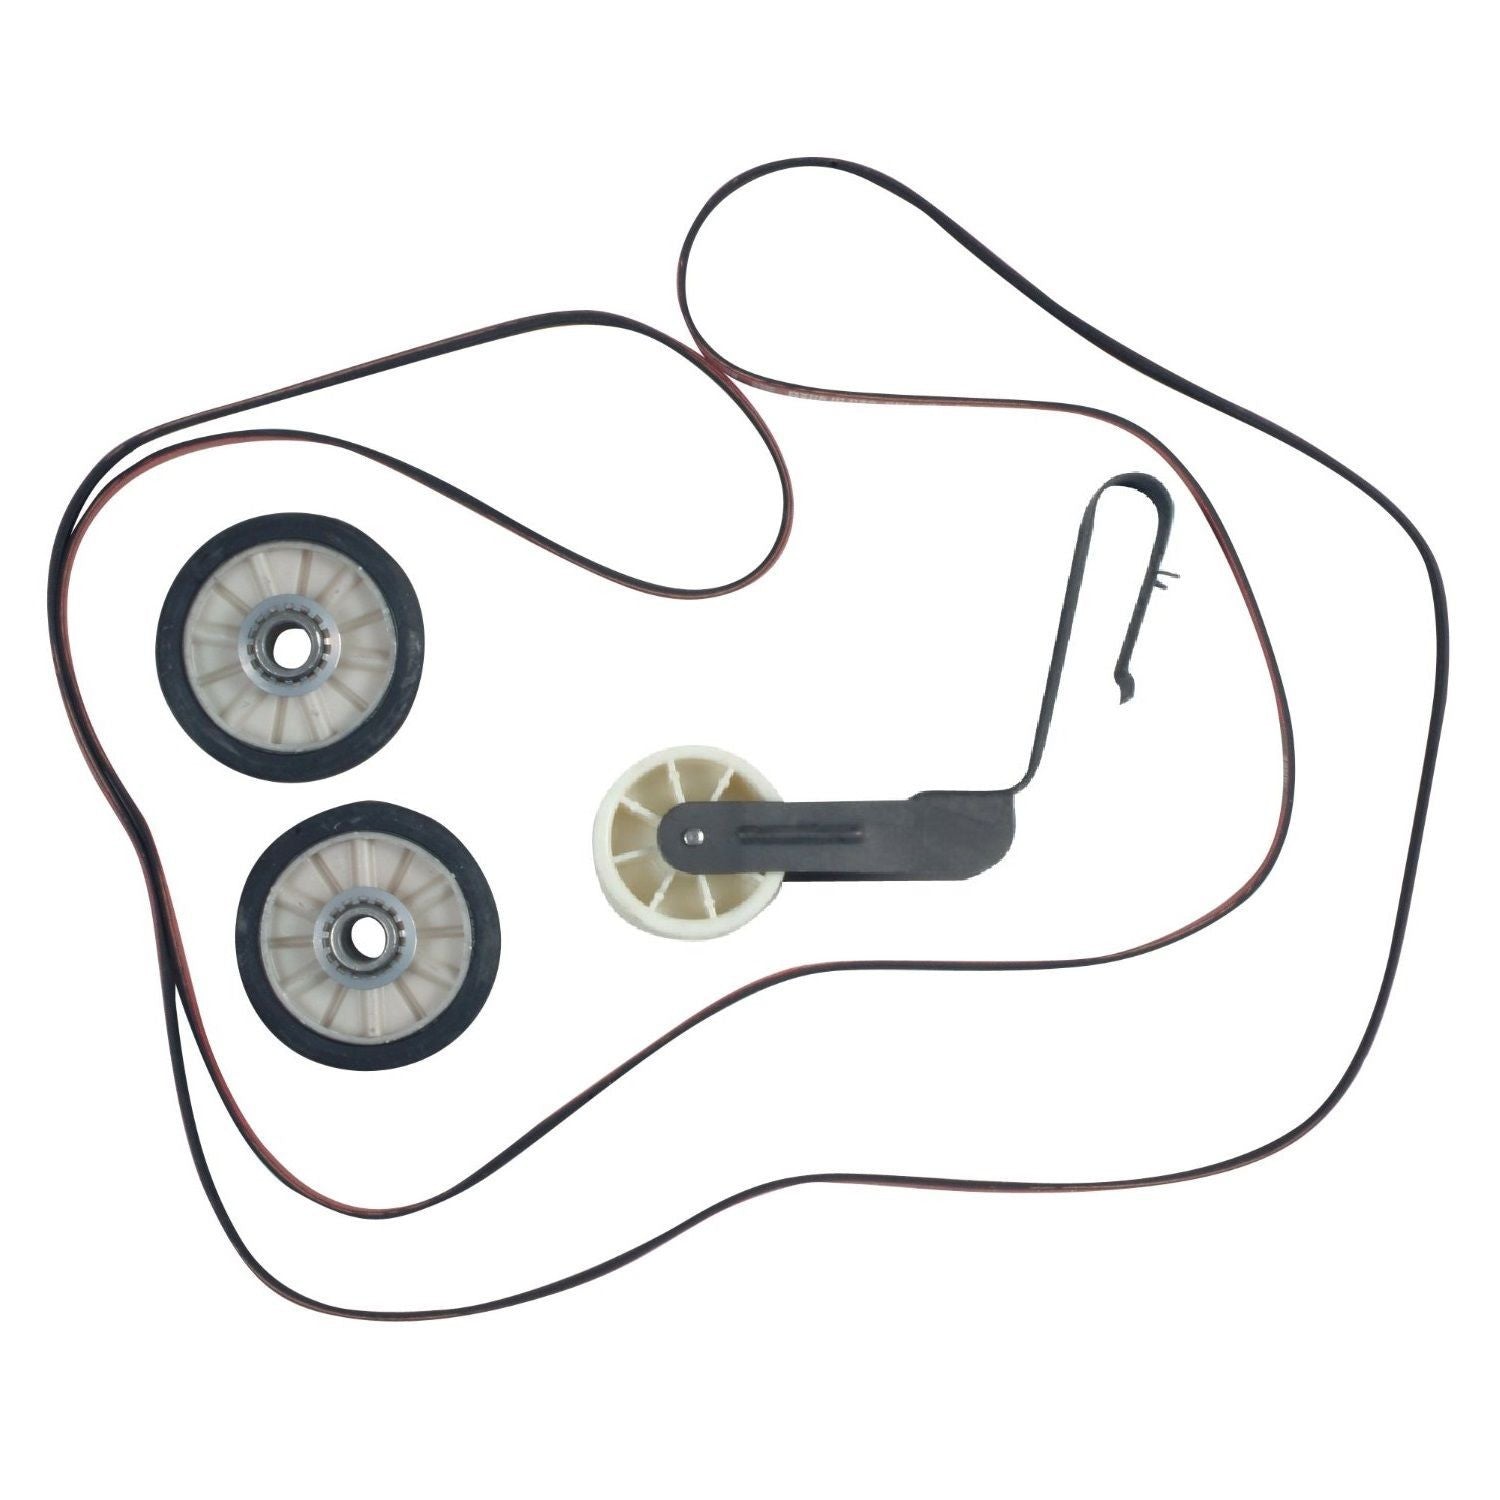 Whirlpool 4392065 Dryer Belt, Pulley & Roller Repair Kit Replacement